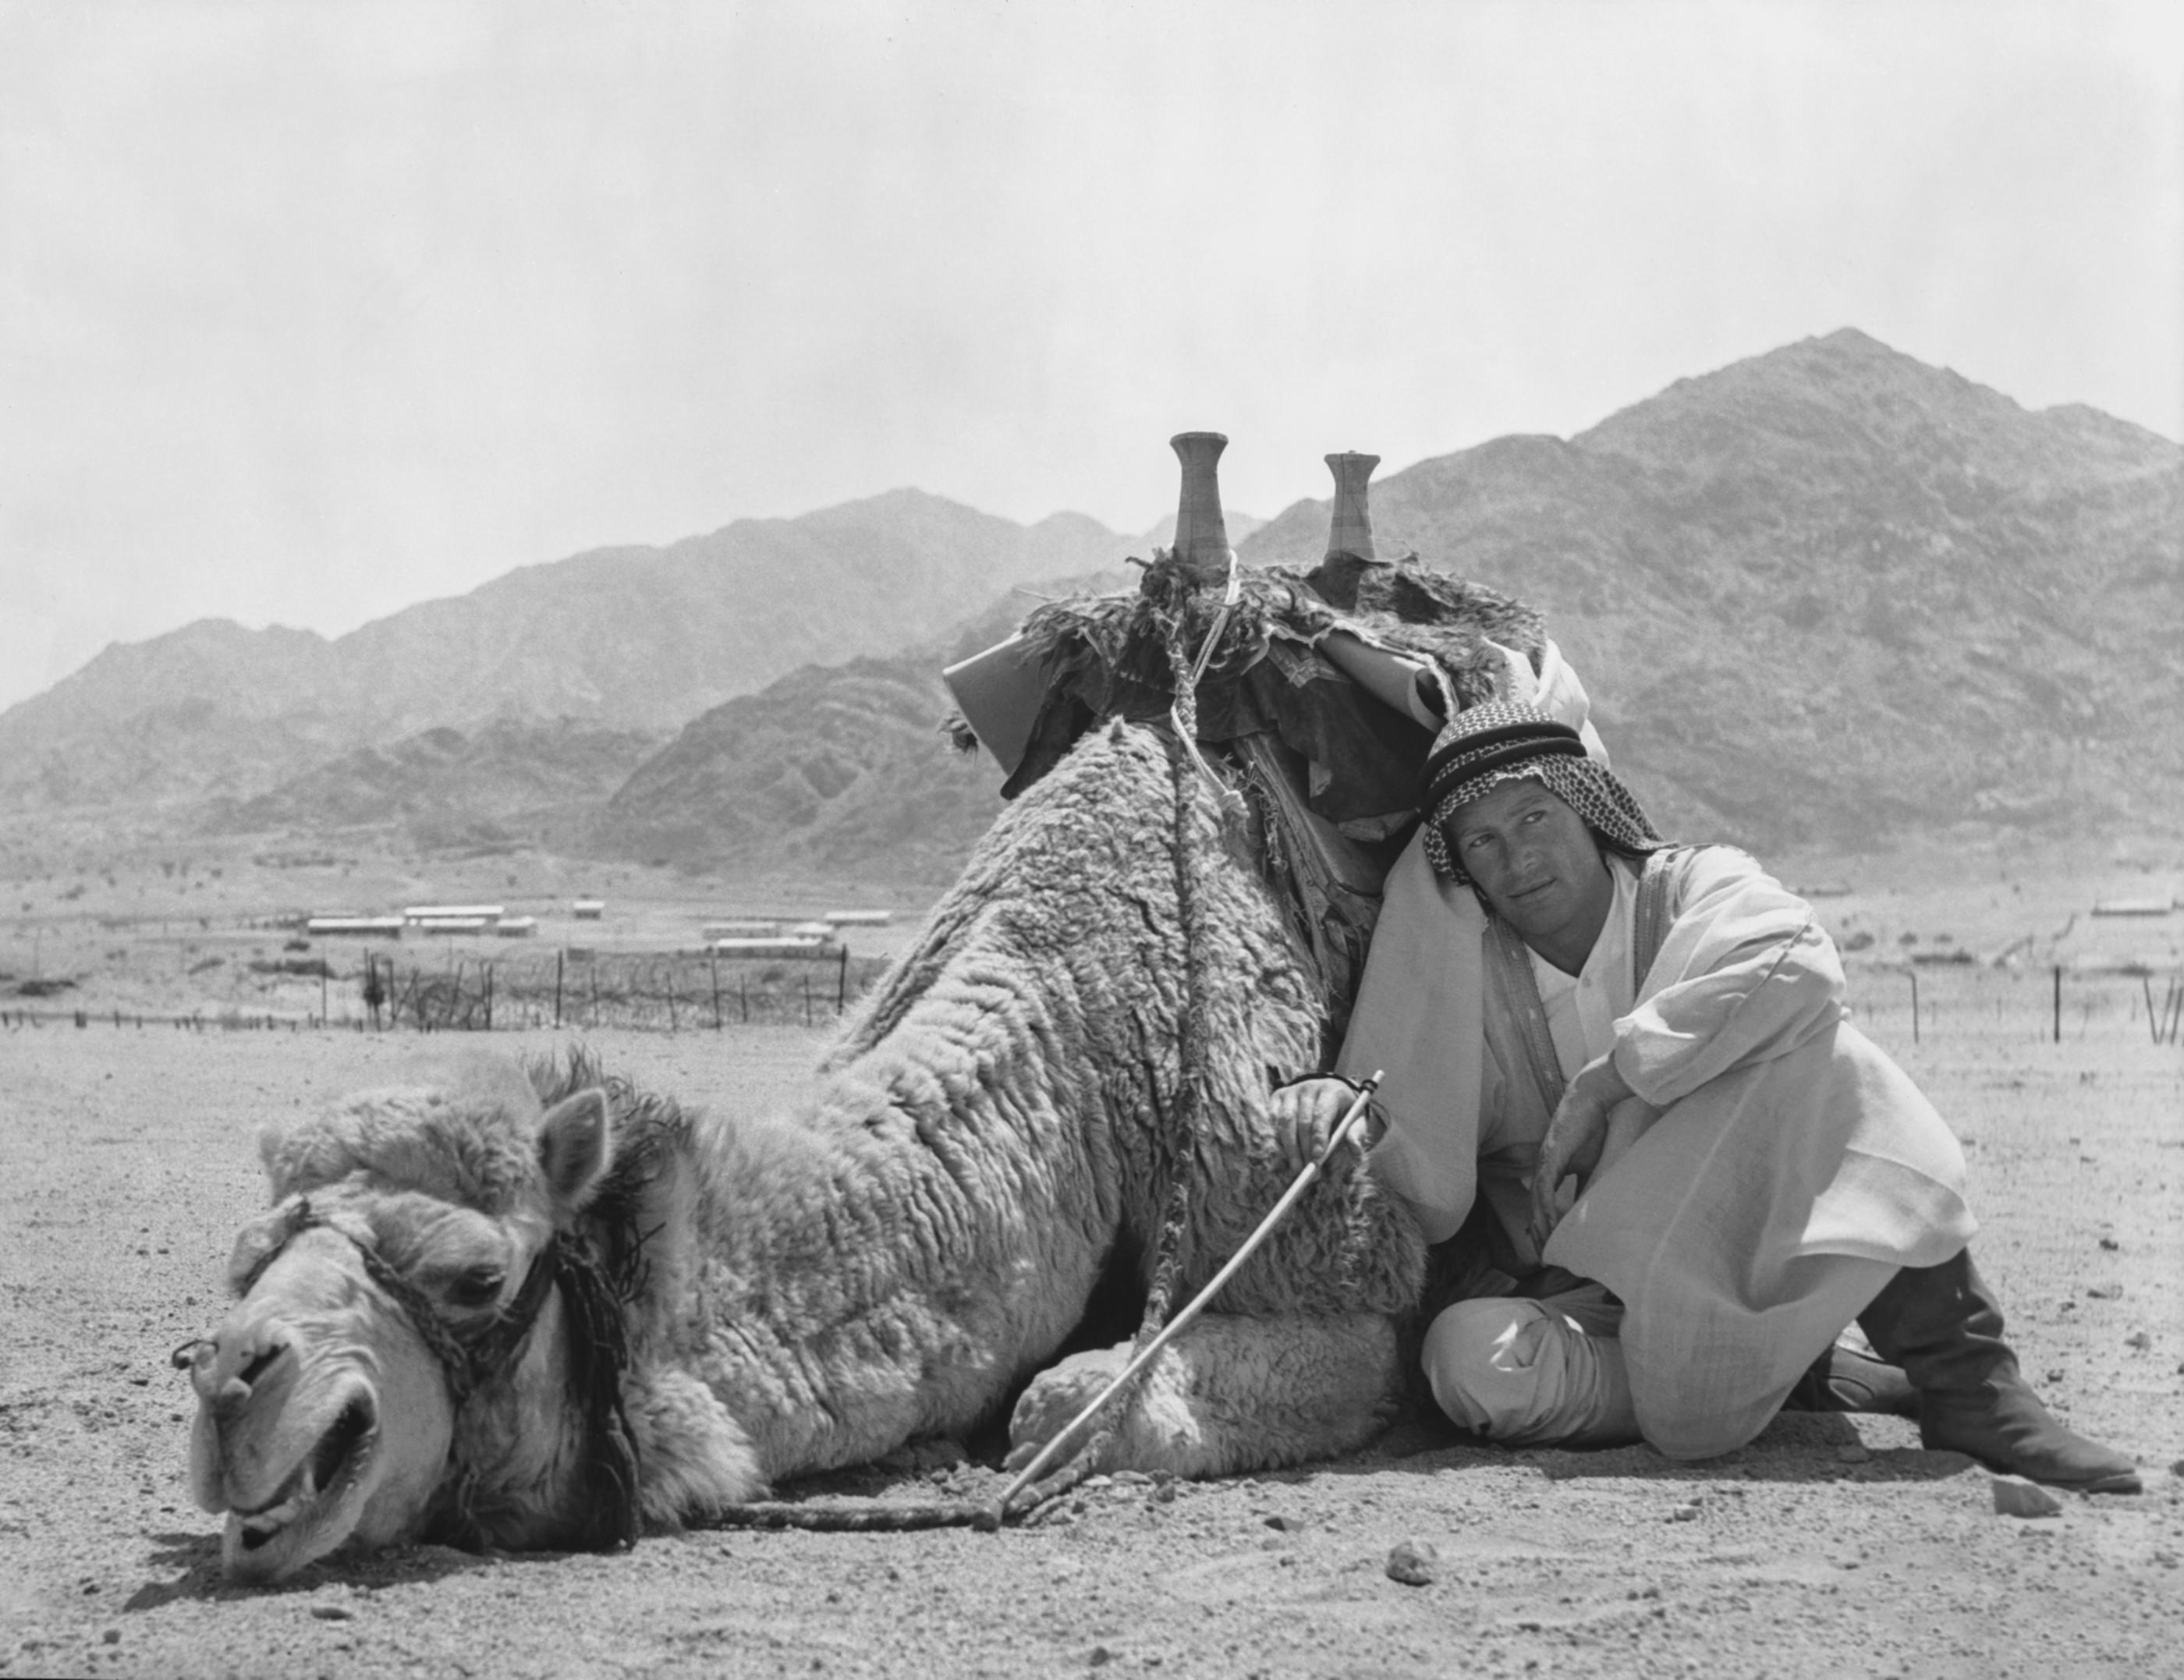 Unknown Portrait Photograph - Lawrence of Arabia Camel Scene